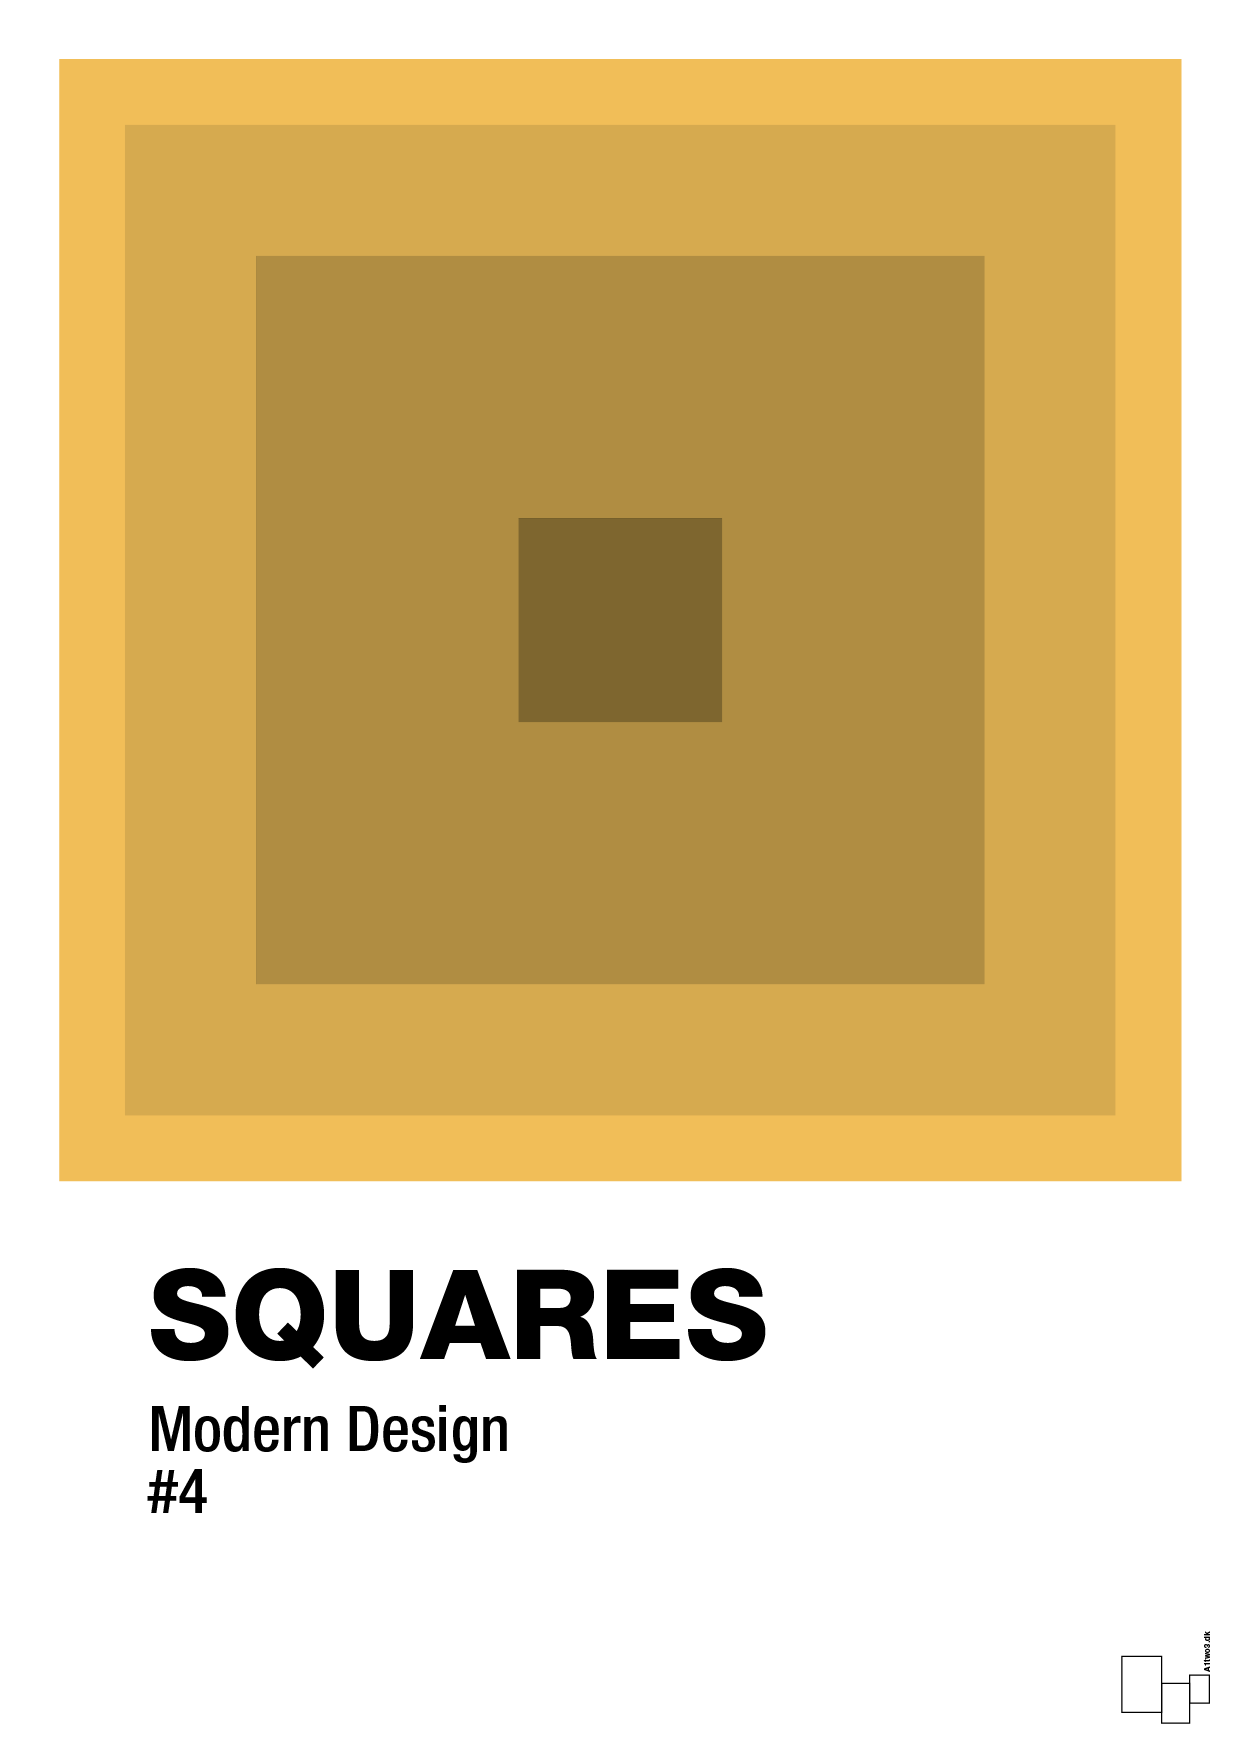 squares #4 - Plakat med Grafik i Honeycomb